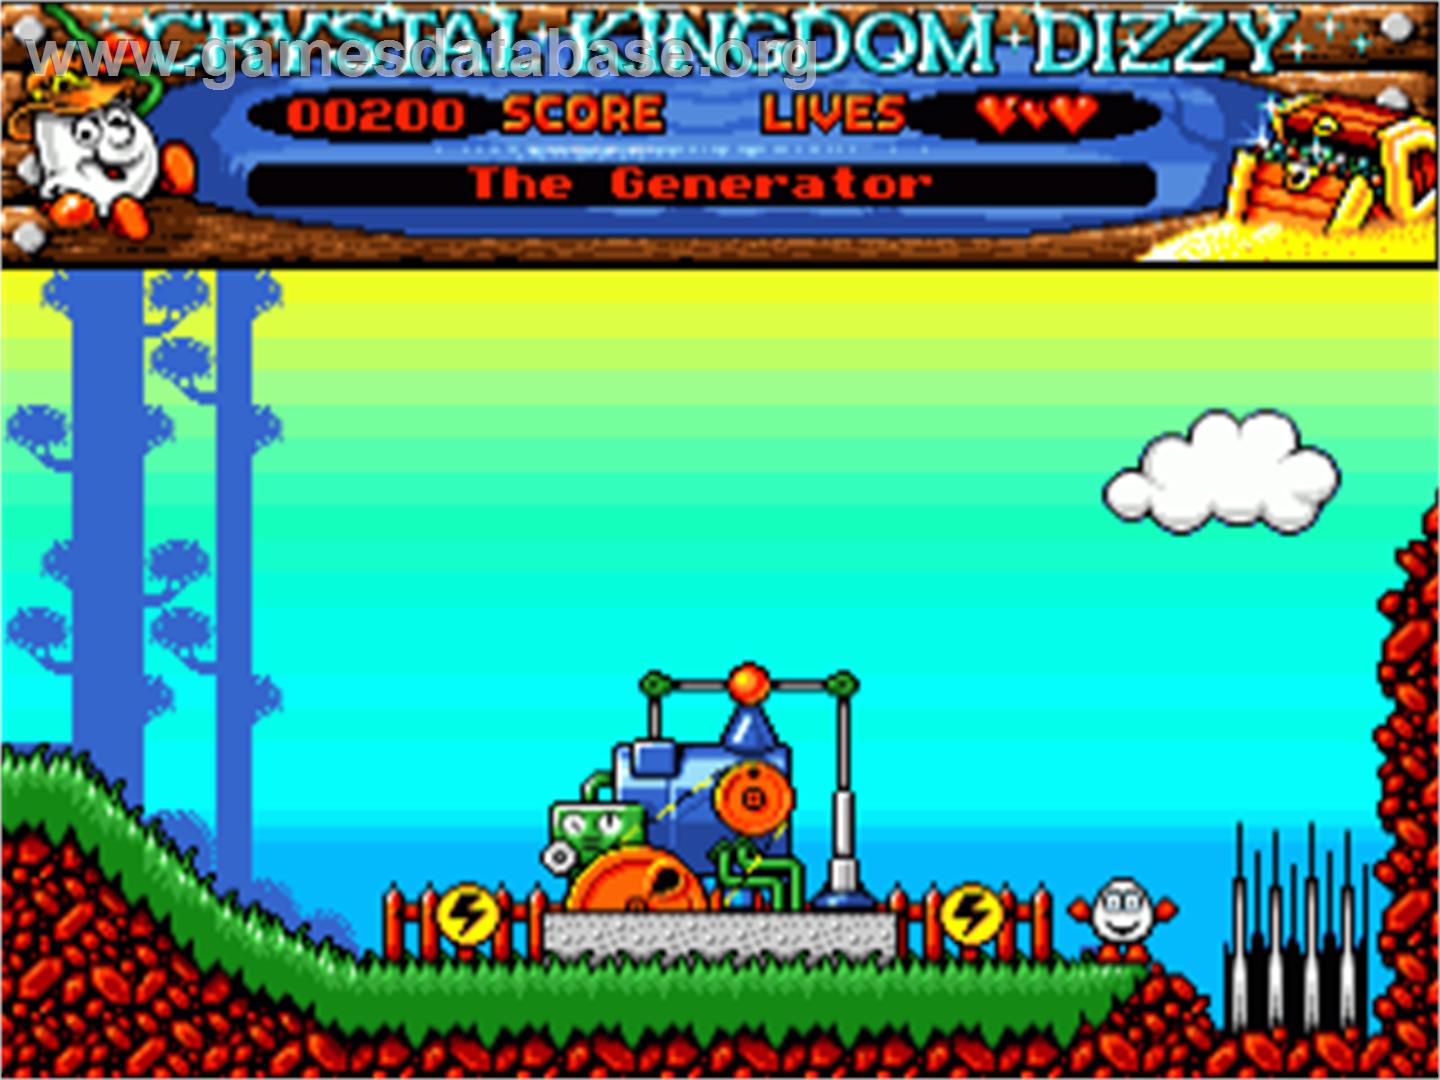 Crystal Kingdom Dizzy - Commodore Amiga - Artwork - In Game